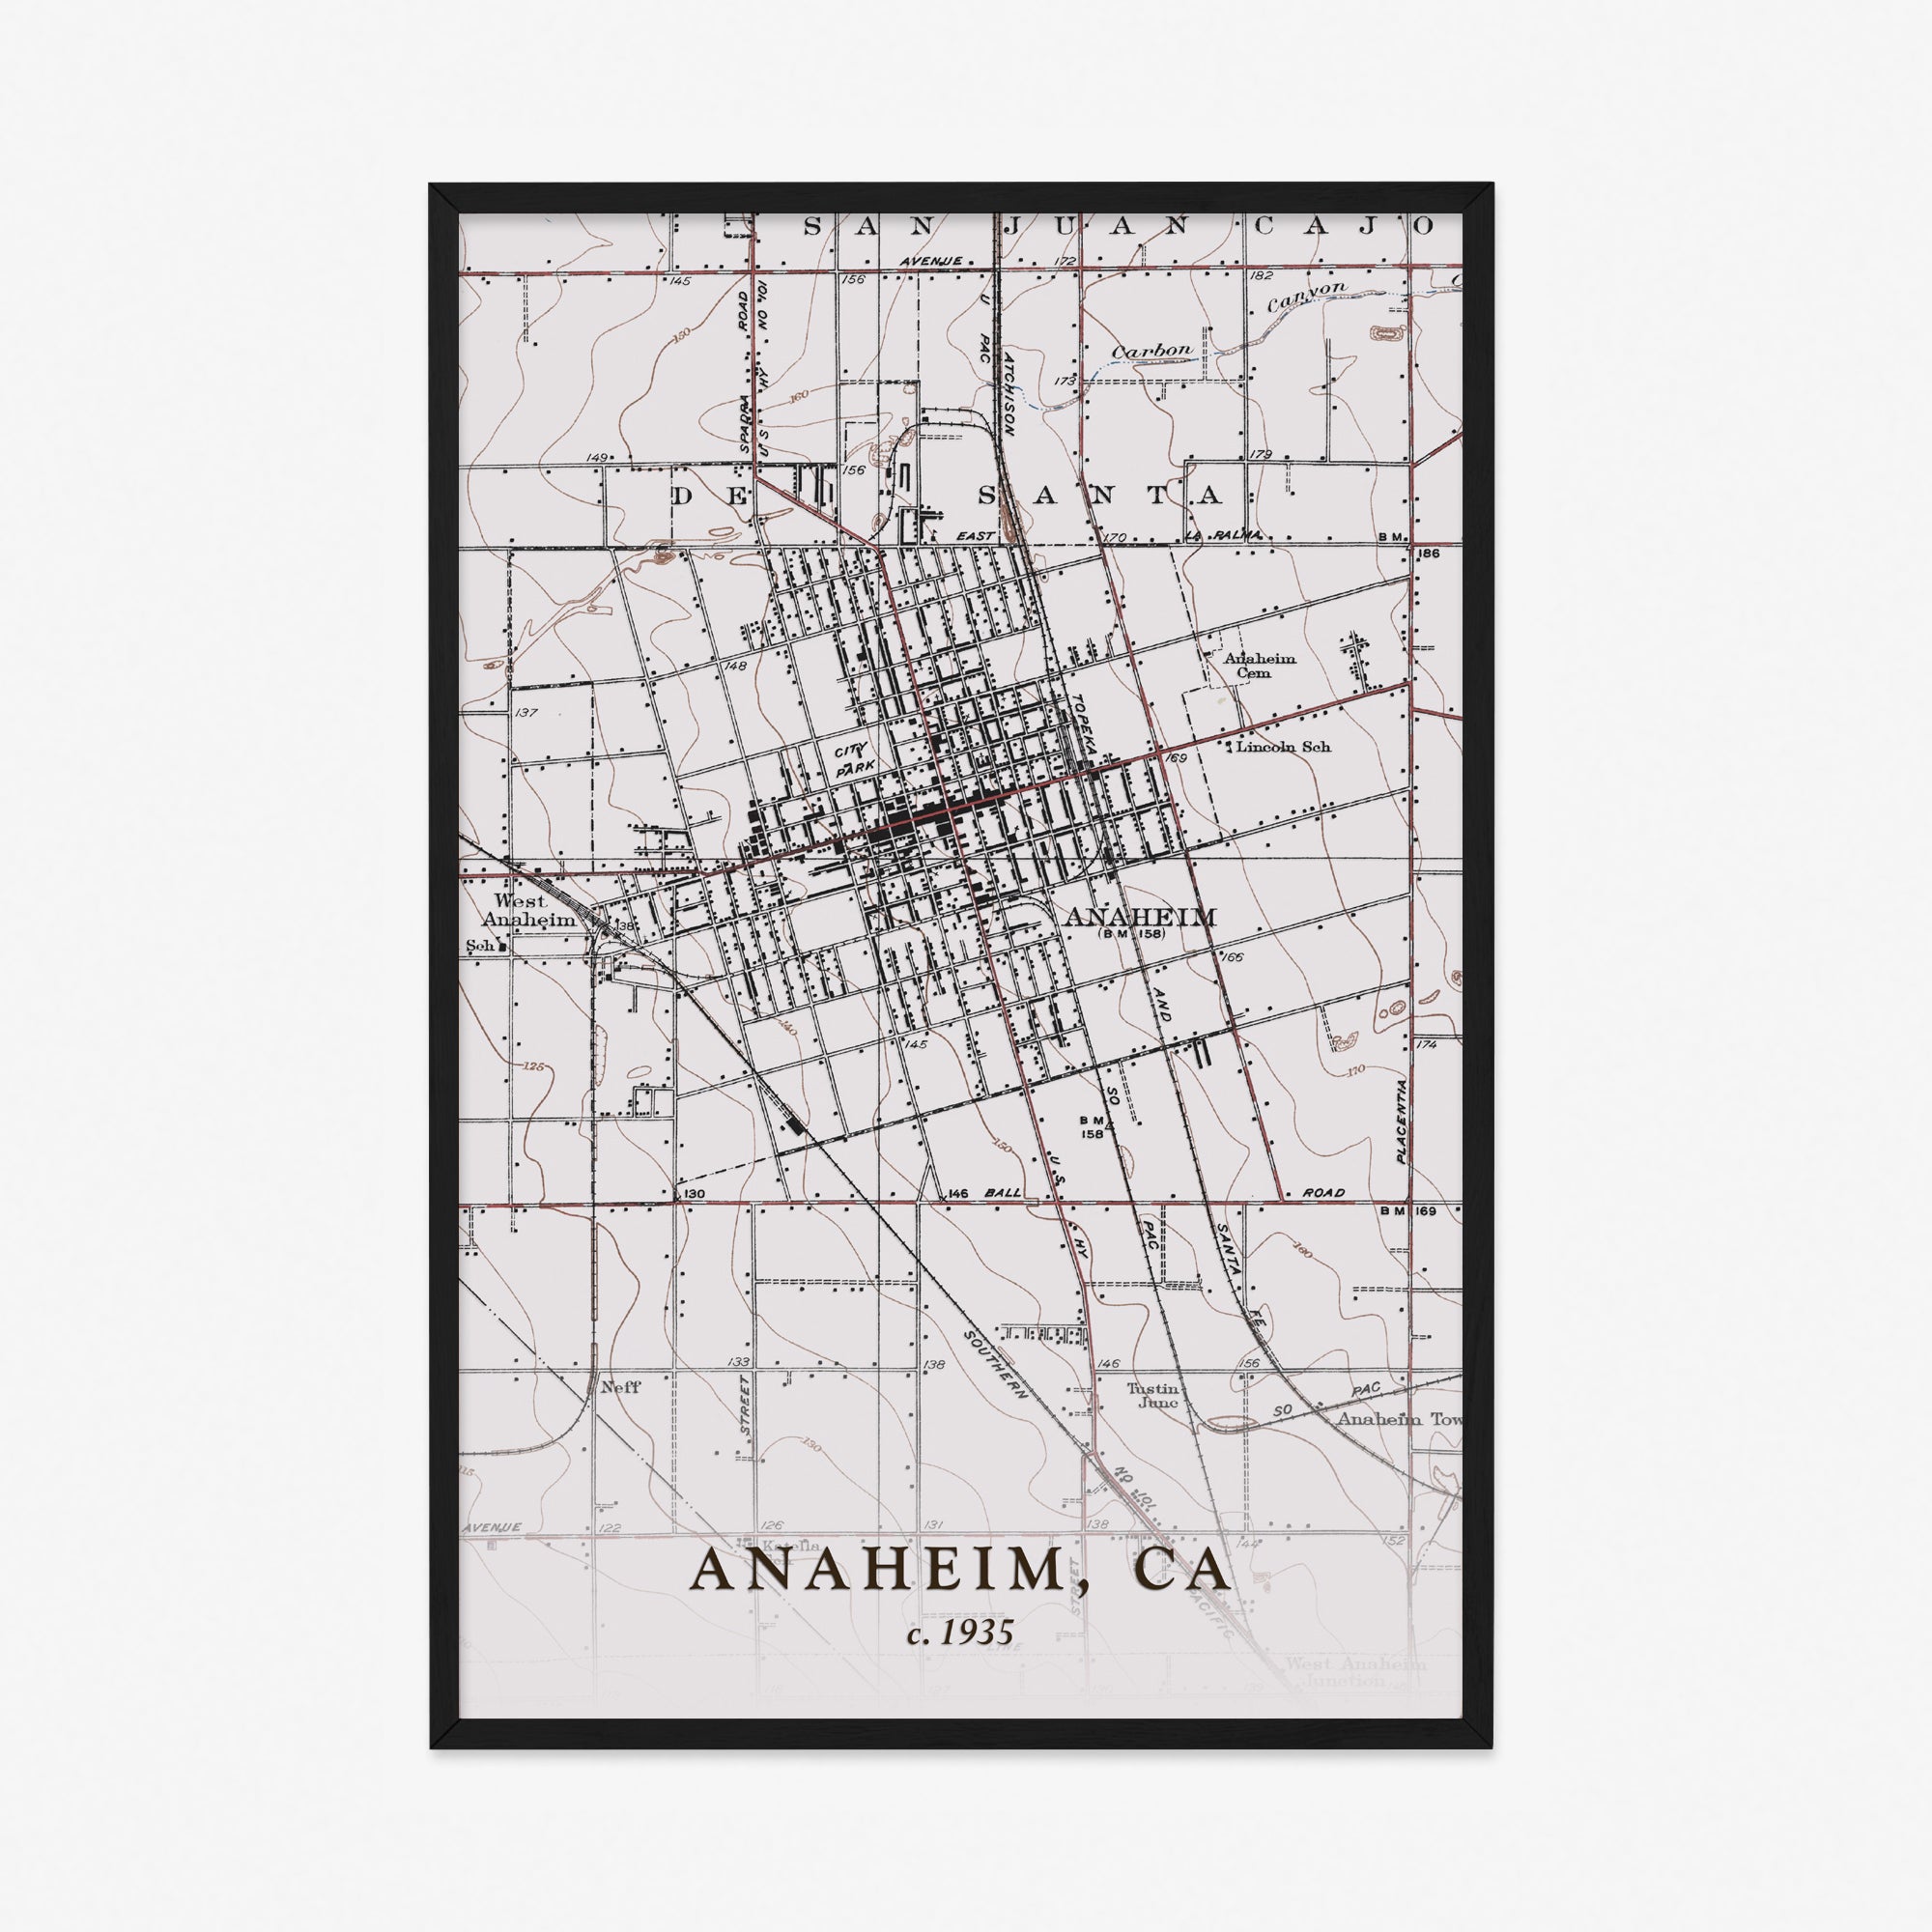 Anaheim, CA - 1935 Topographic Map